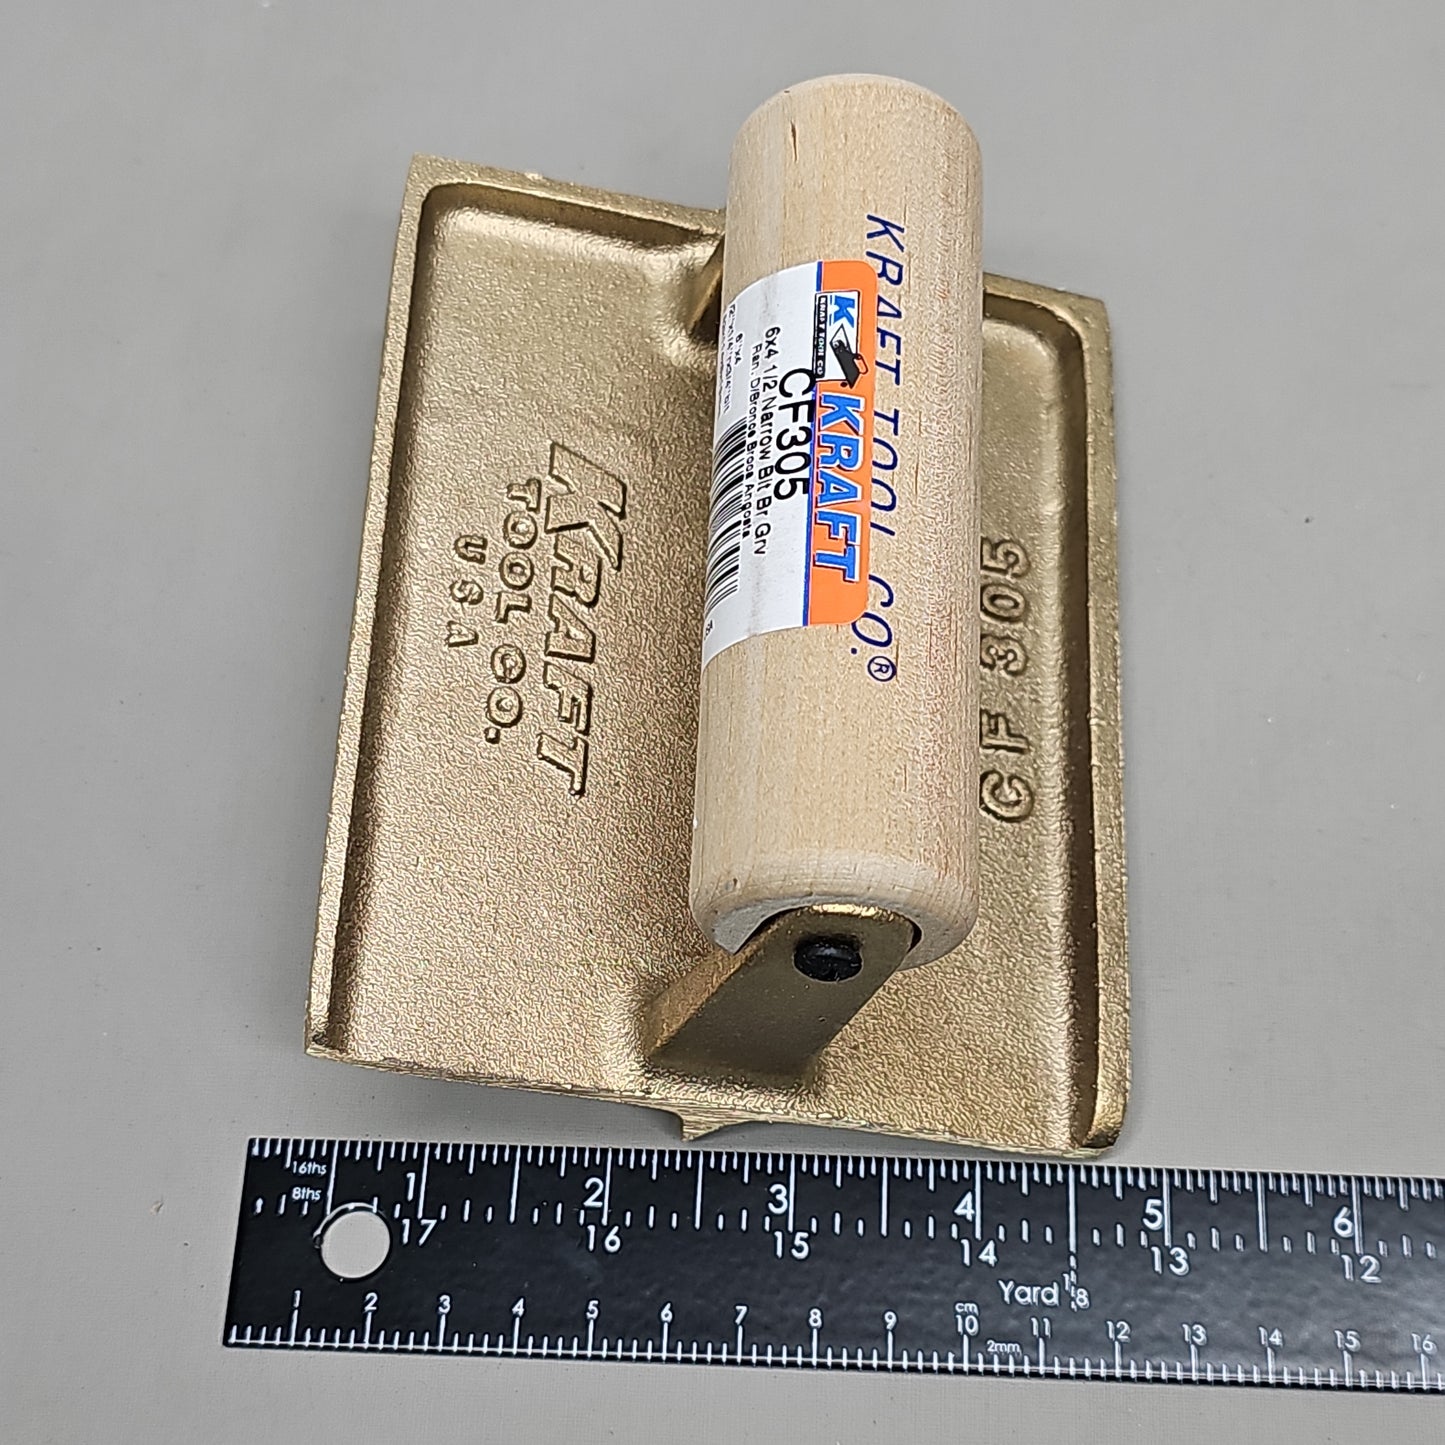 KRAFT TOOL CO Narrow Bit Bronze Groover with Wood Handle 6" x 4-1/2" 1/4"R, 3/4"D CF305 (New)